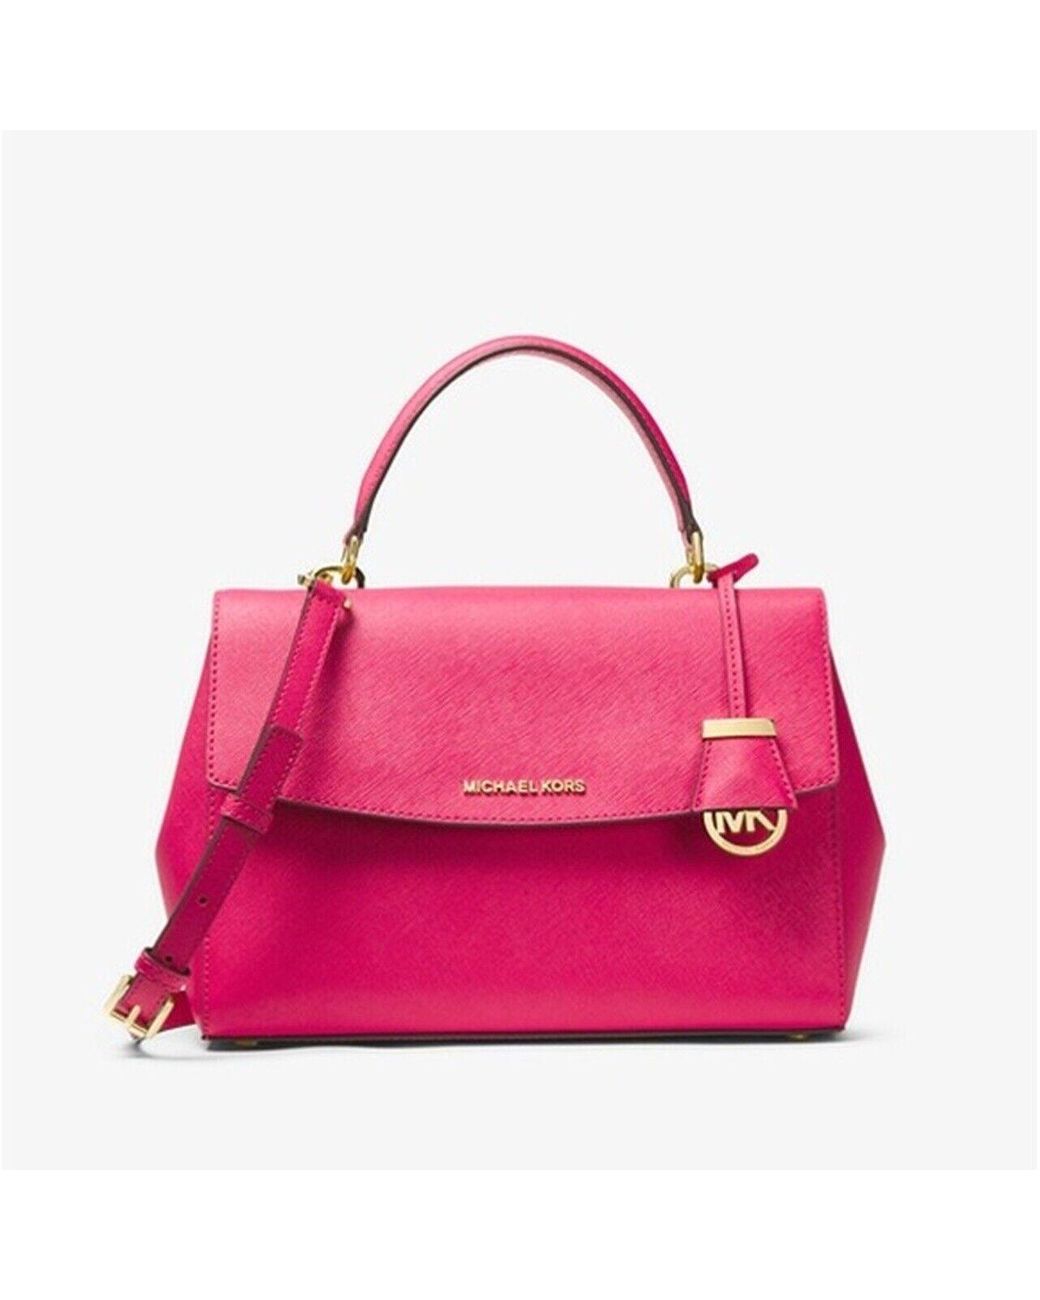 Michael Kors Ava Leather Convertible Satchel Crossbody Bag in Pink